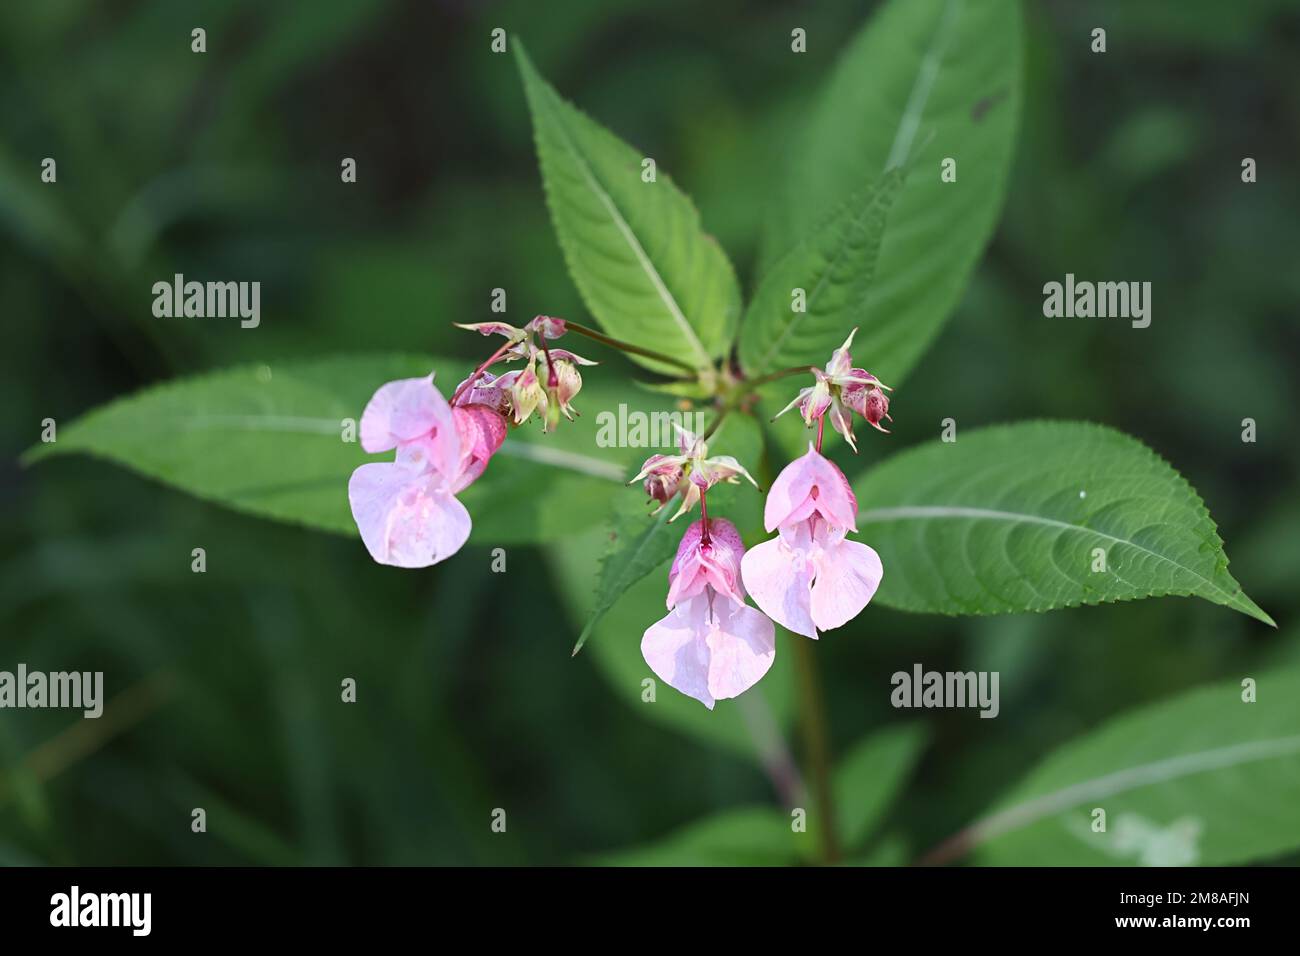 Impatiens glandulifera, known as Himalayan Balsam, invasive harmful wild plant Stock Photo